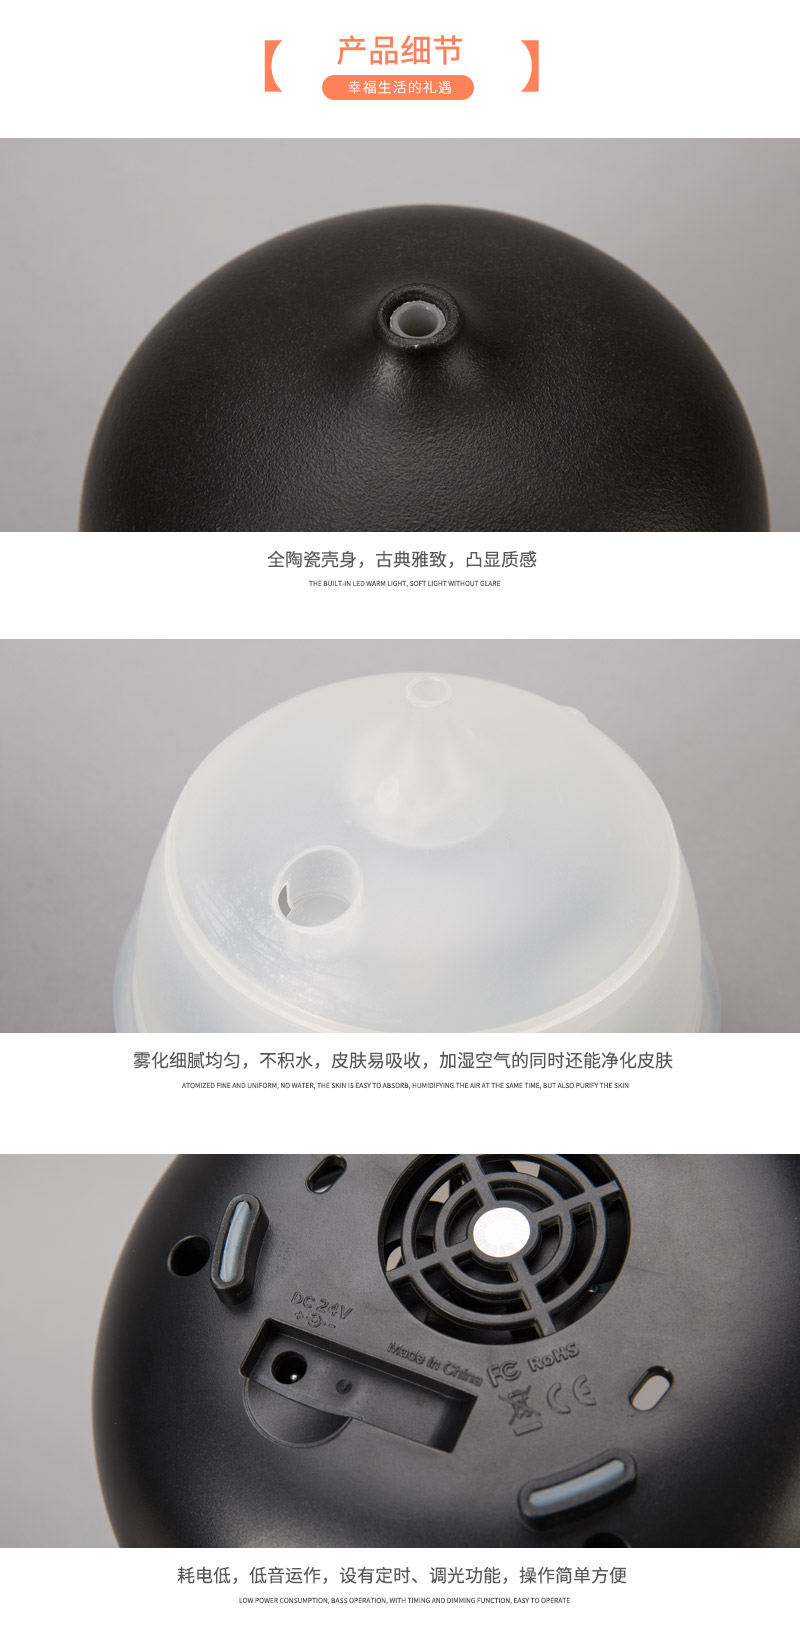 Black ceramic oxygen bar humidifier5